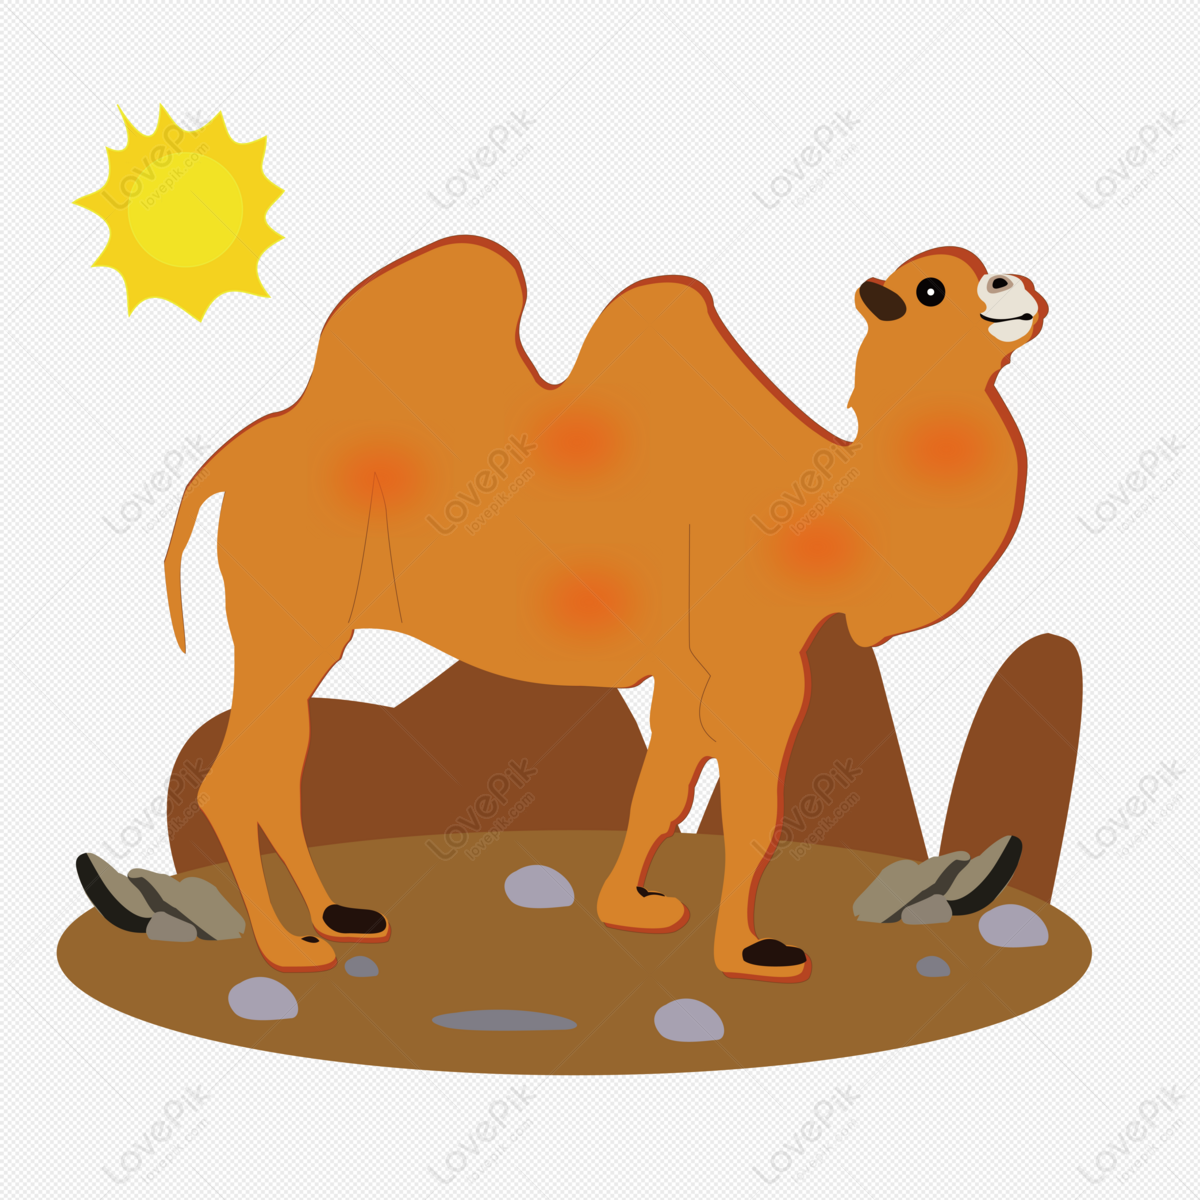 camels in desert clipart